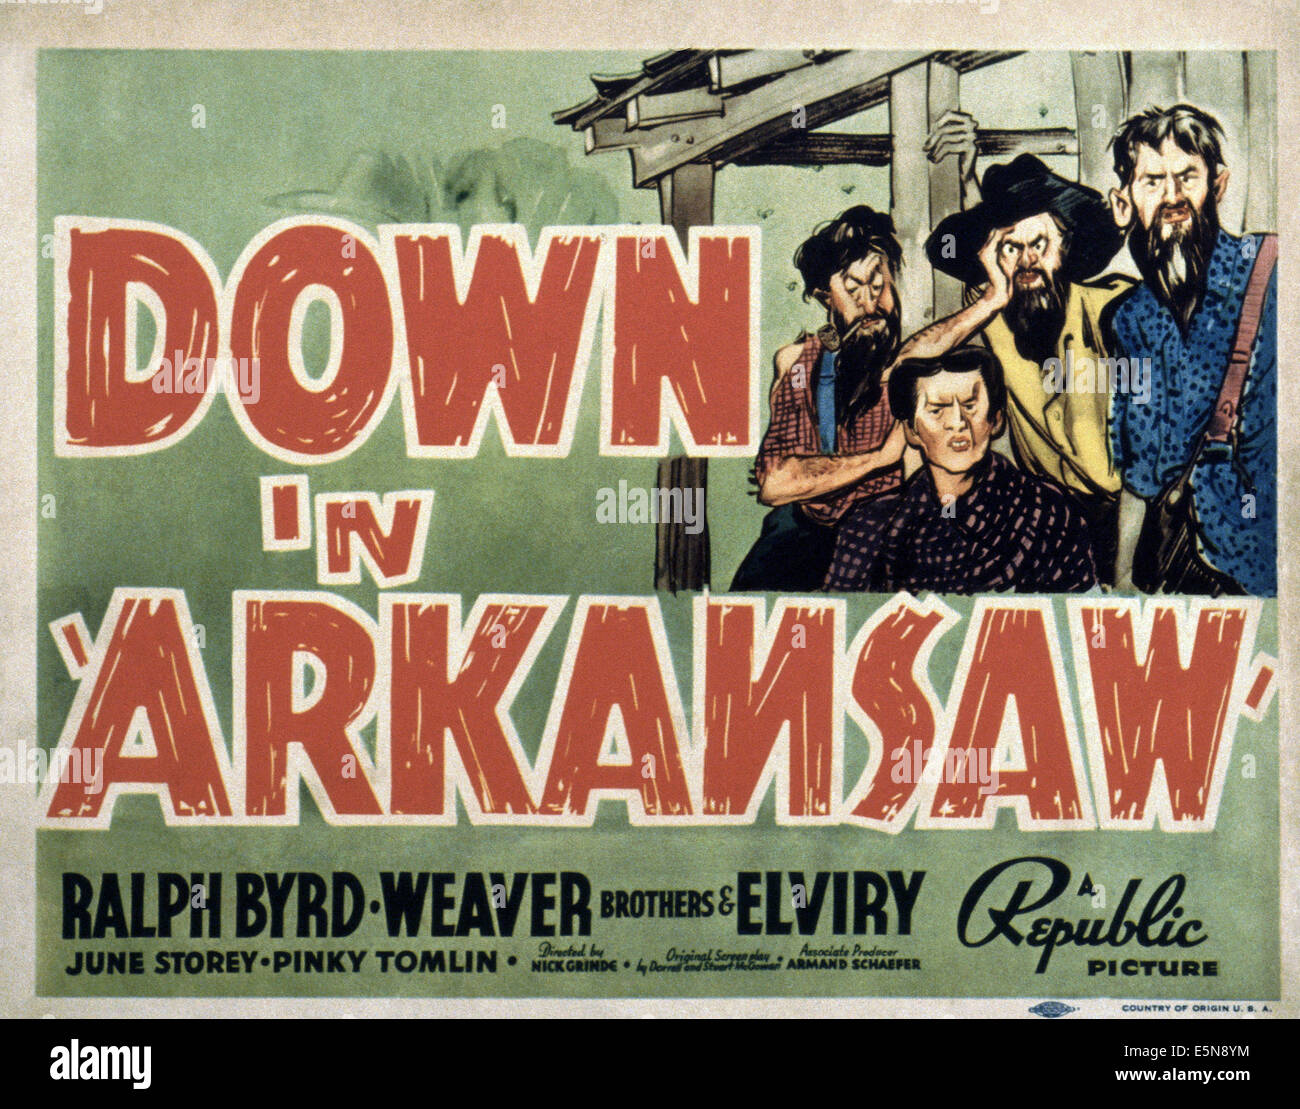 Giù in 'ARKANSAW', il tessitore fratelli & Elviry, 1938 Foto Stock